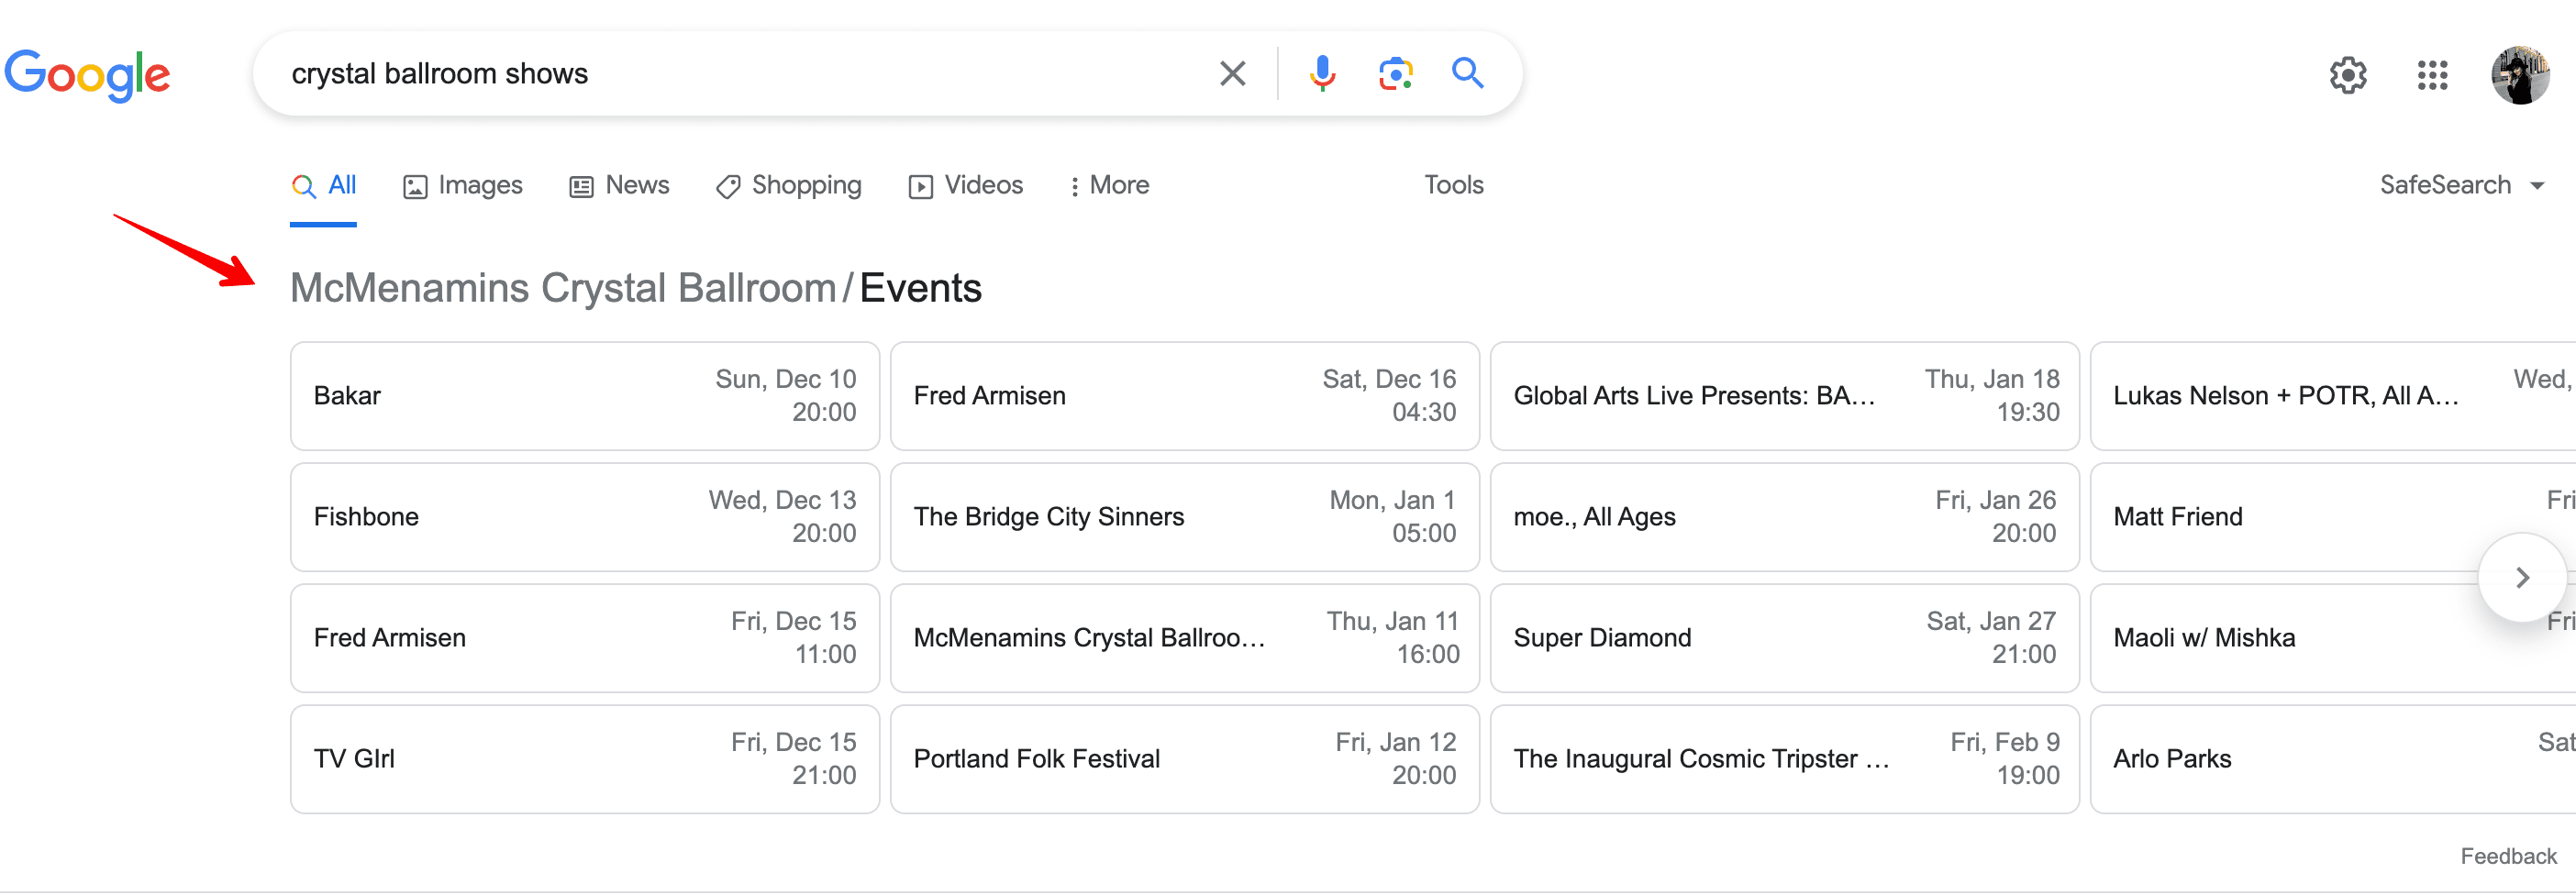 Event schedule SERP feature